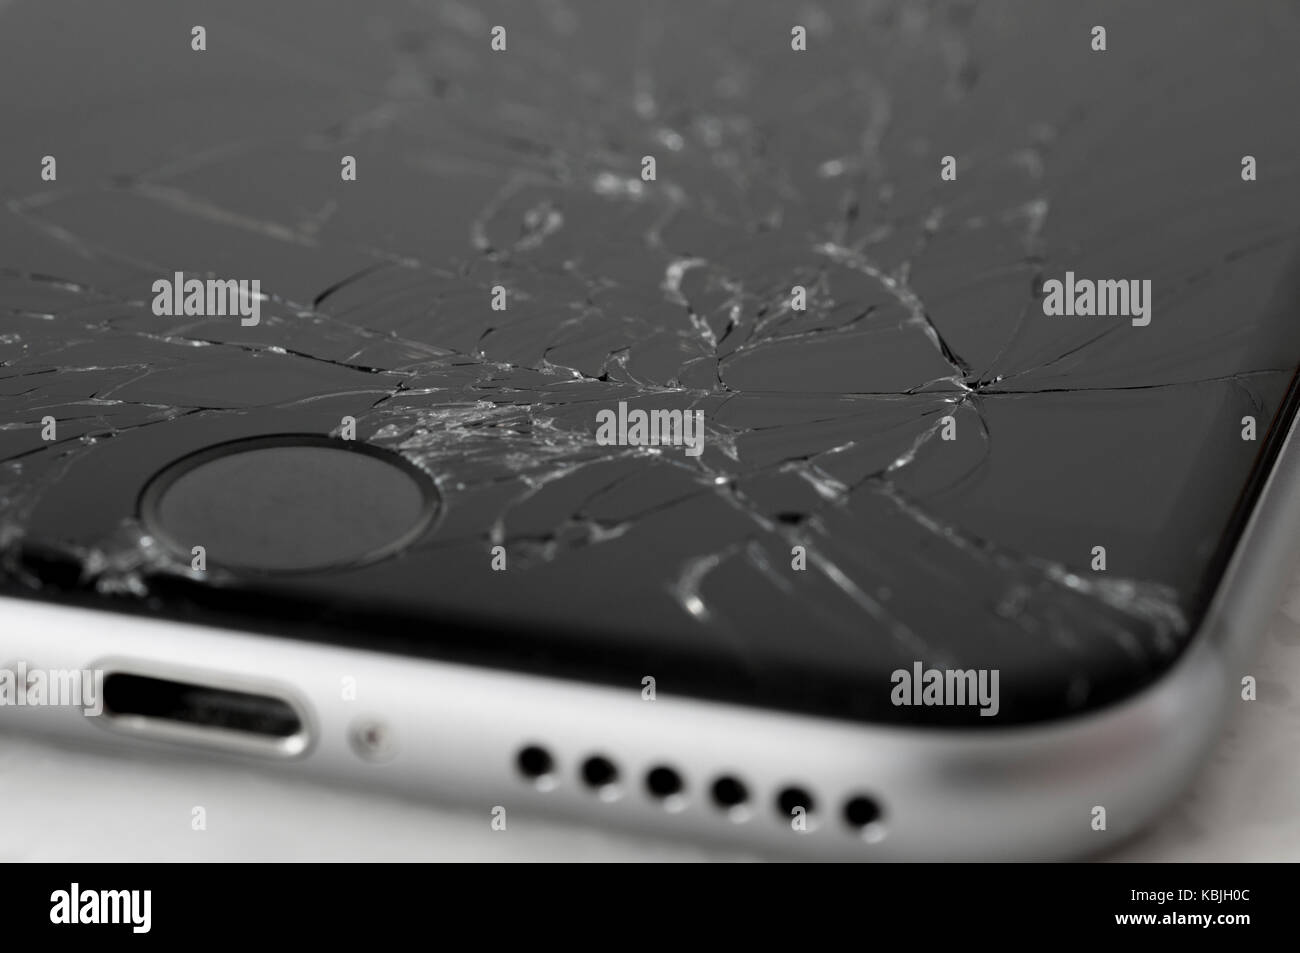 Apple iPhone 6s with broken screen Stock Photo - Alamy